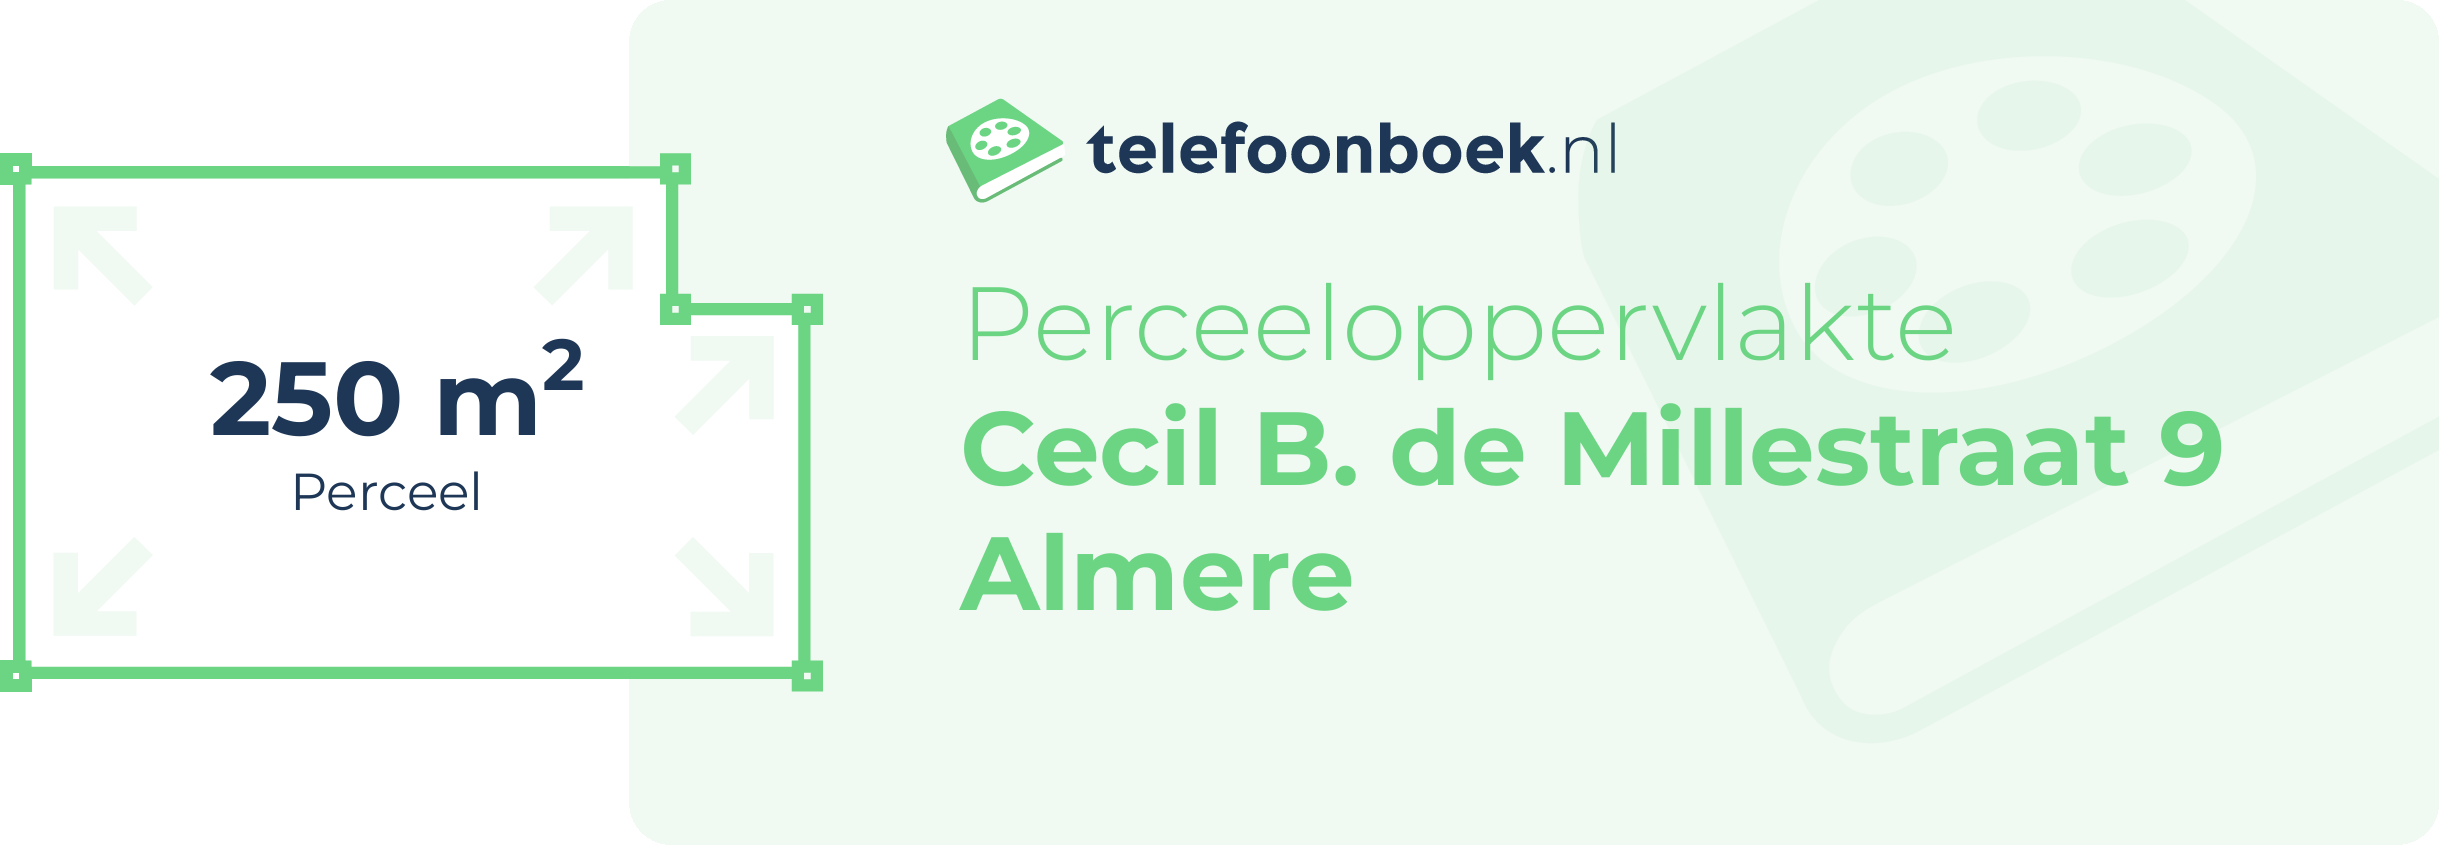 Perceeloppervlakte Cecil B. De Millestraat 9 Almere